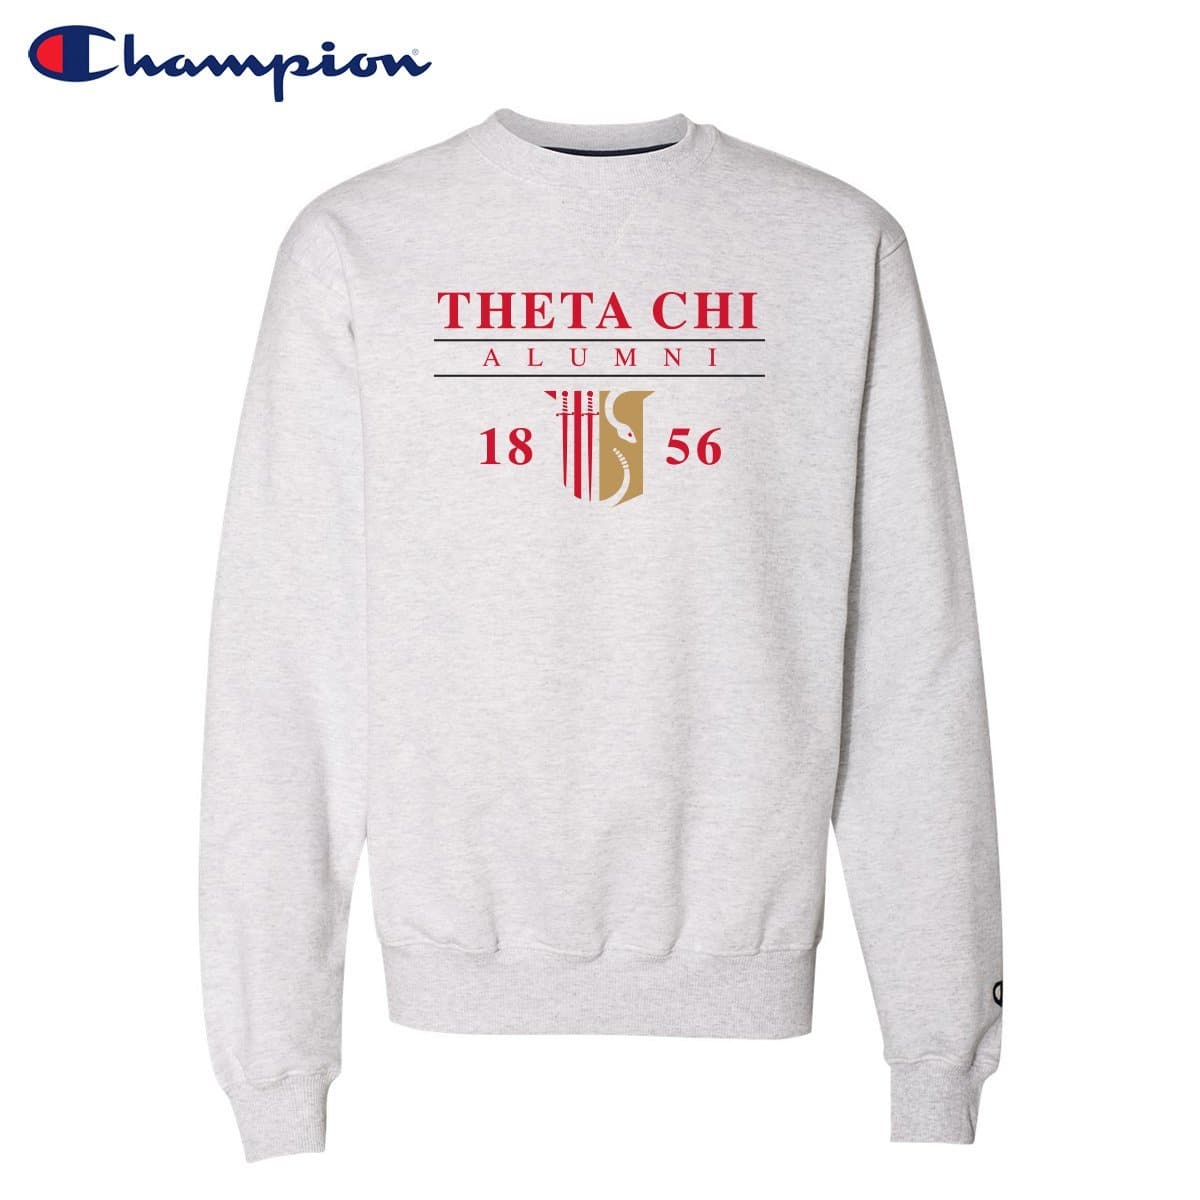 Theta Chi Alumni Champion Crewneck | Theta Chi | Sweatshirts > Crewneck sweatshirts